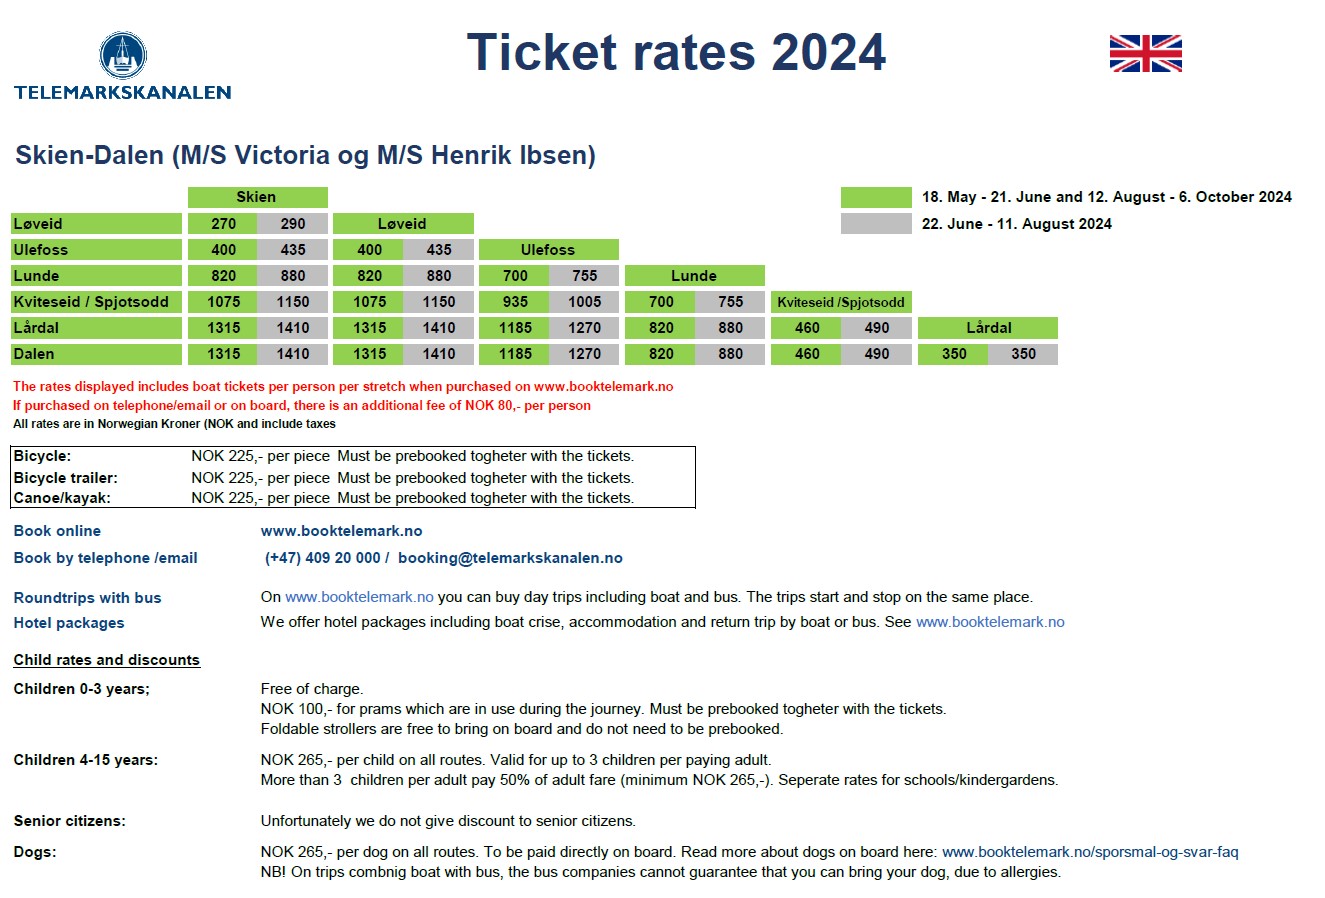 billettpriser 2024 engelsk